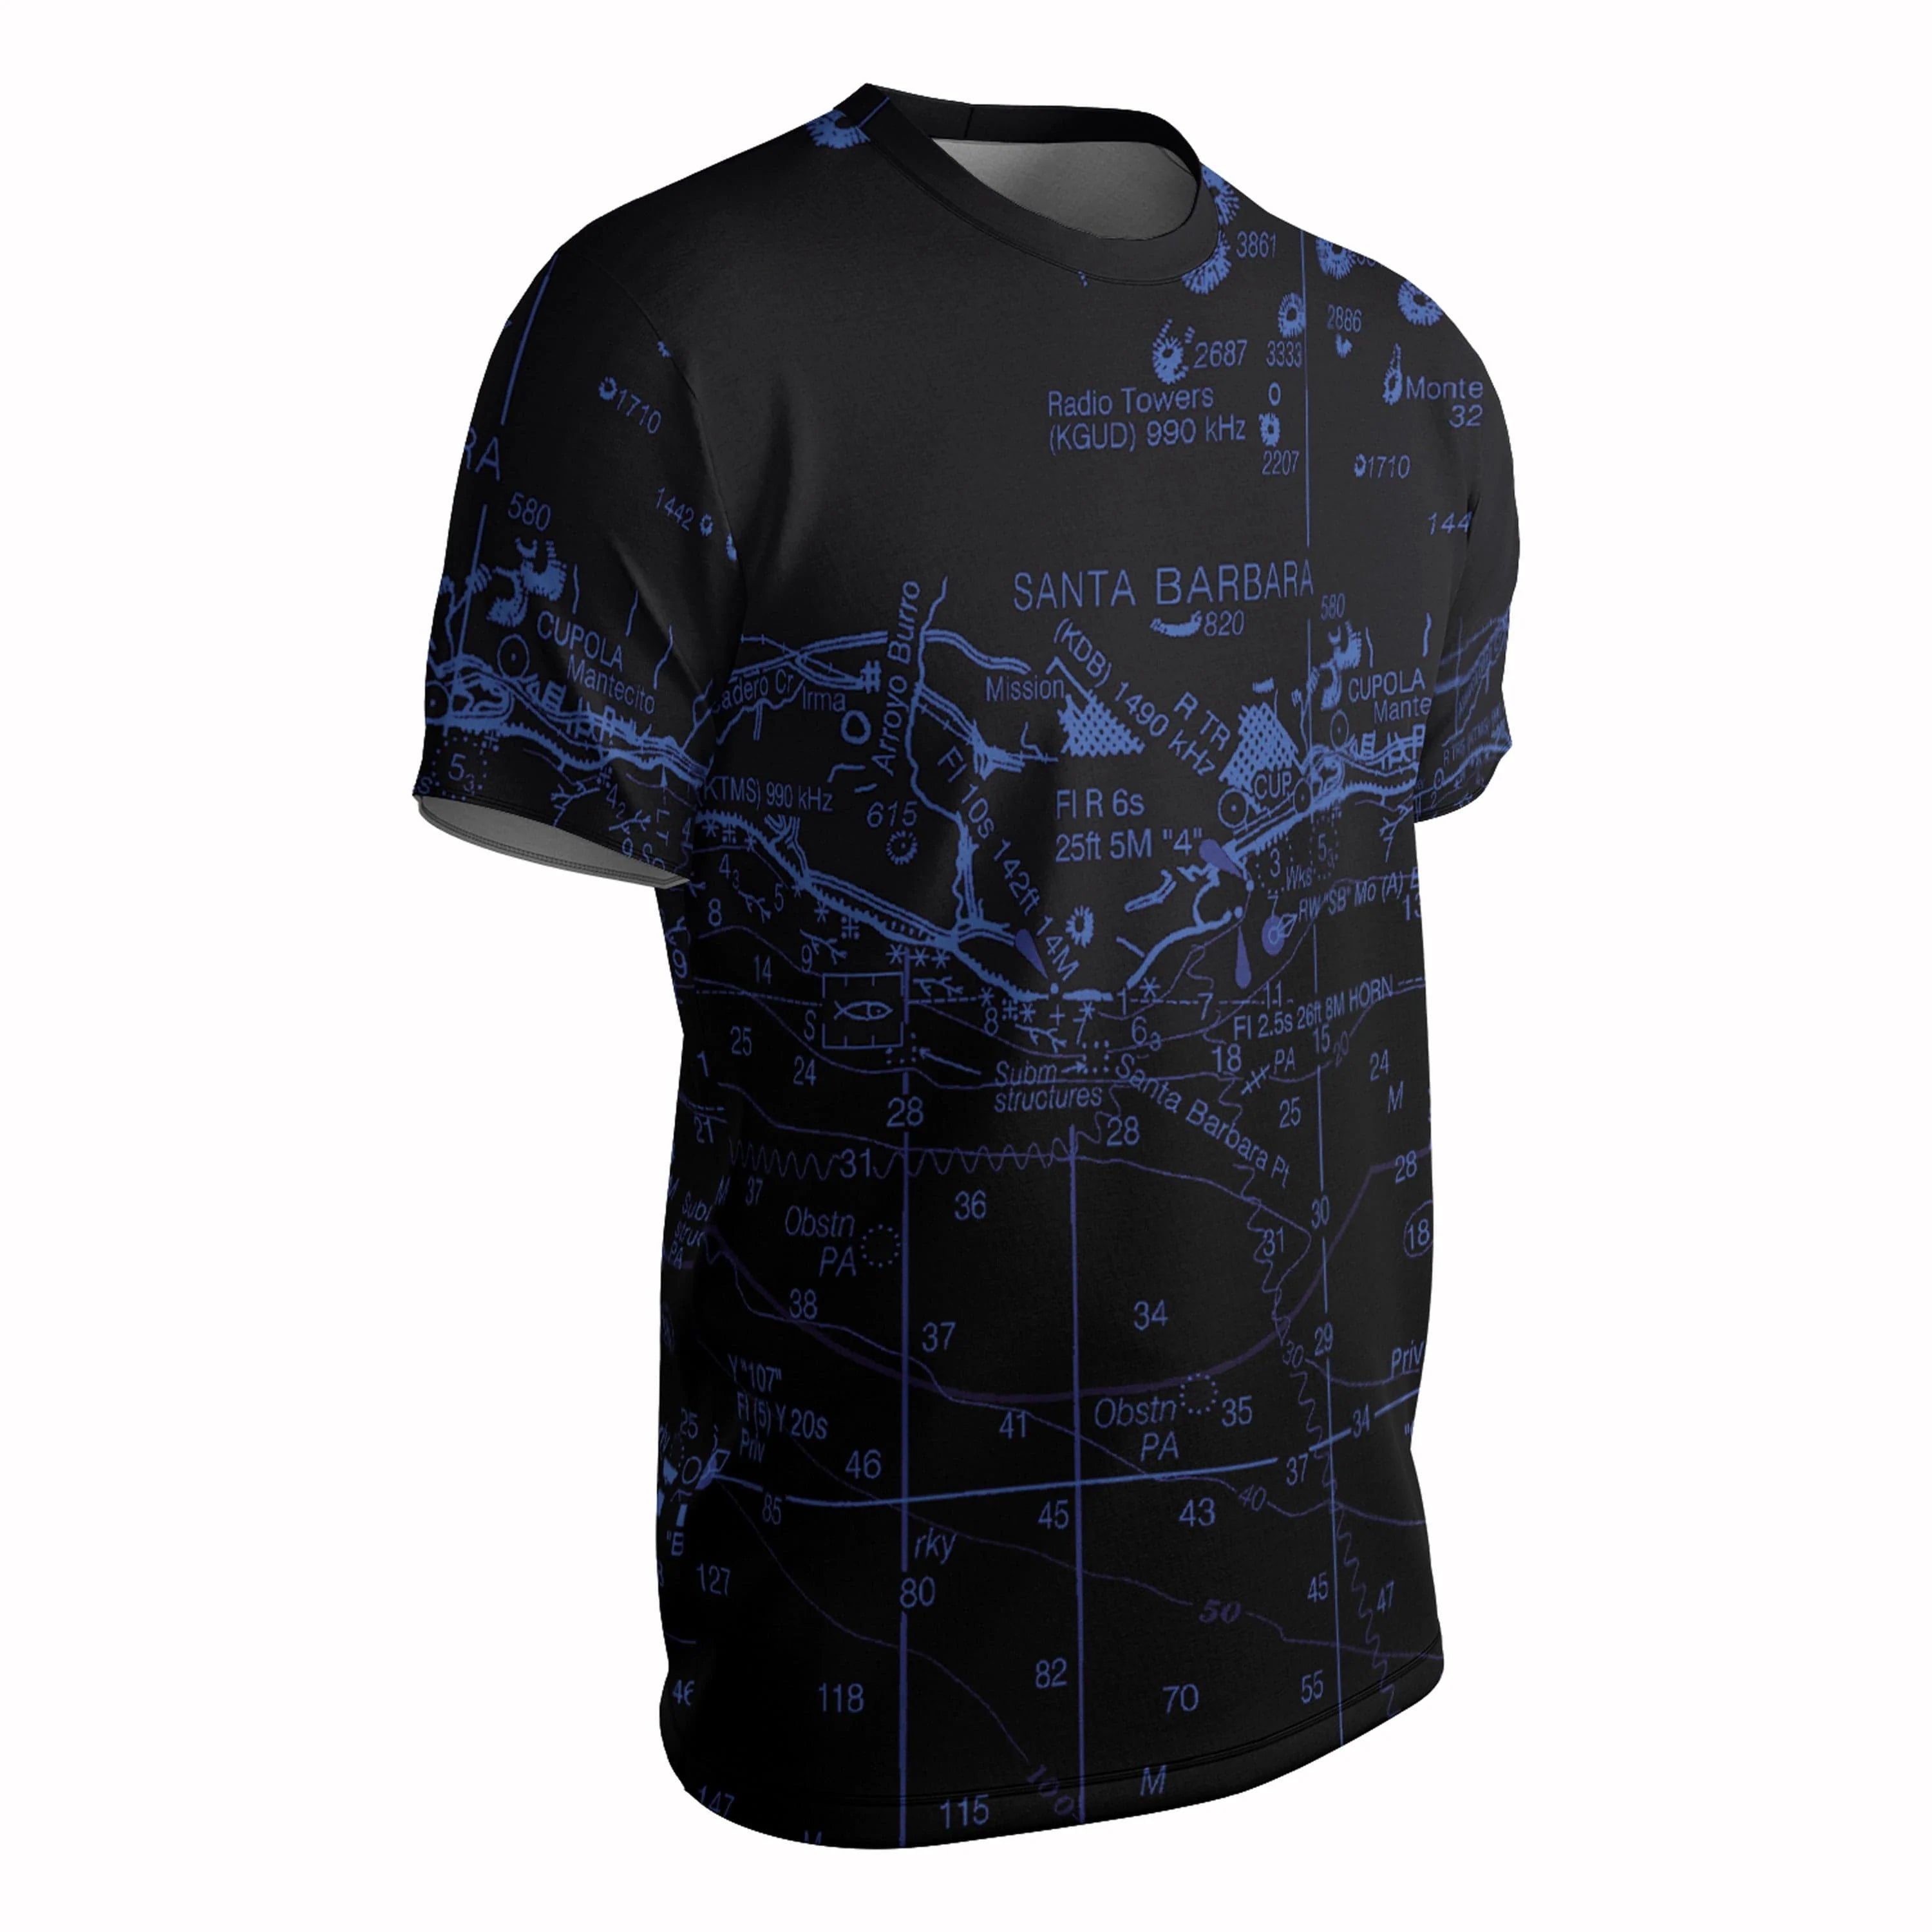 The Santa Barbara Midnight Navigator T-Shirt